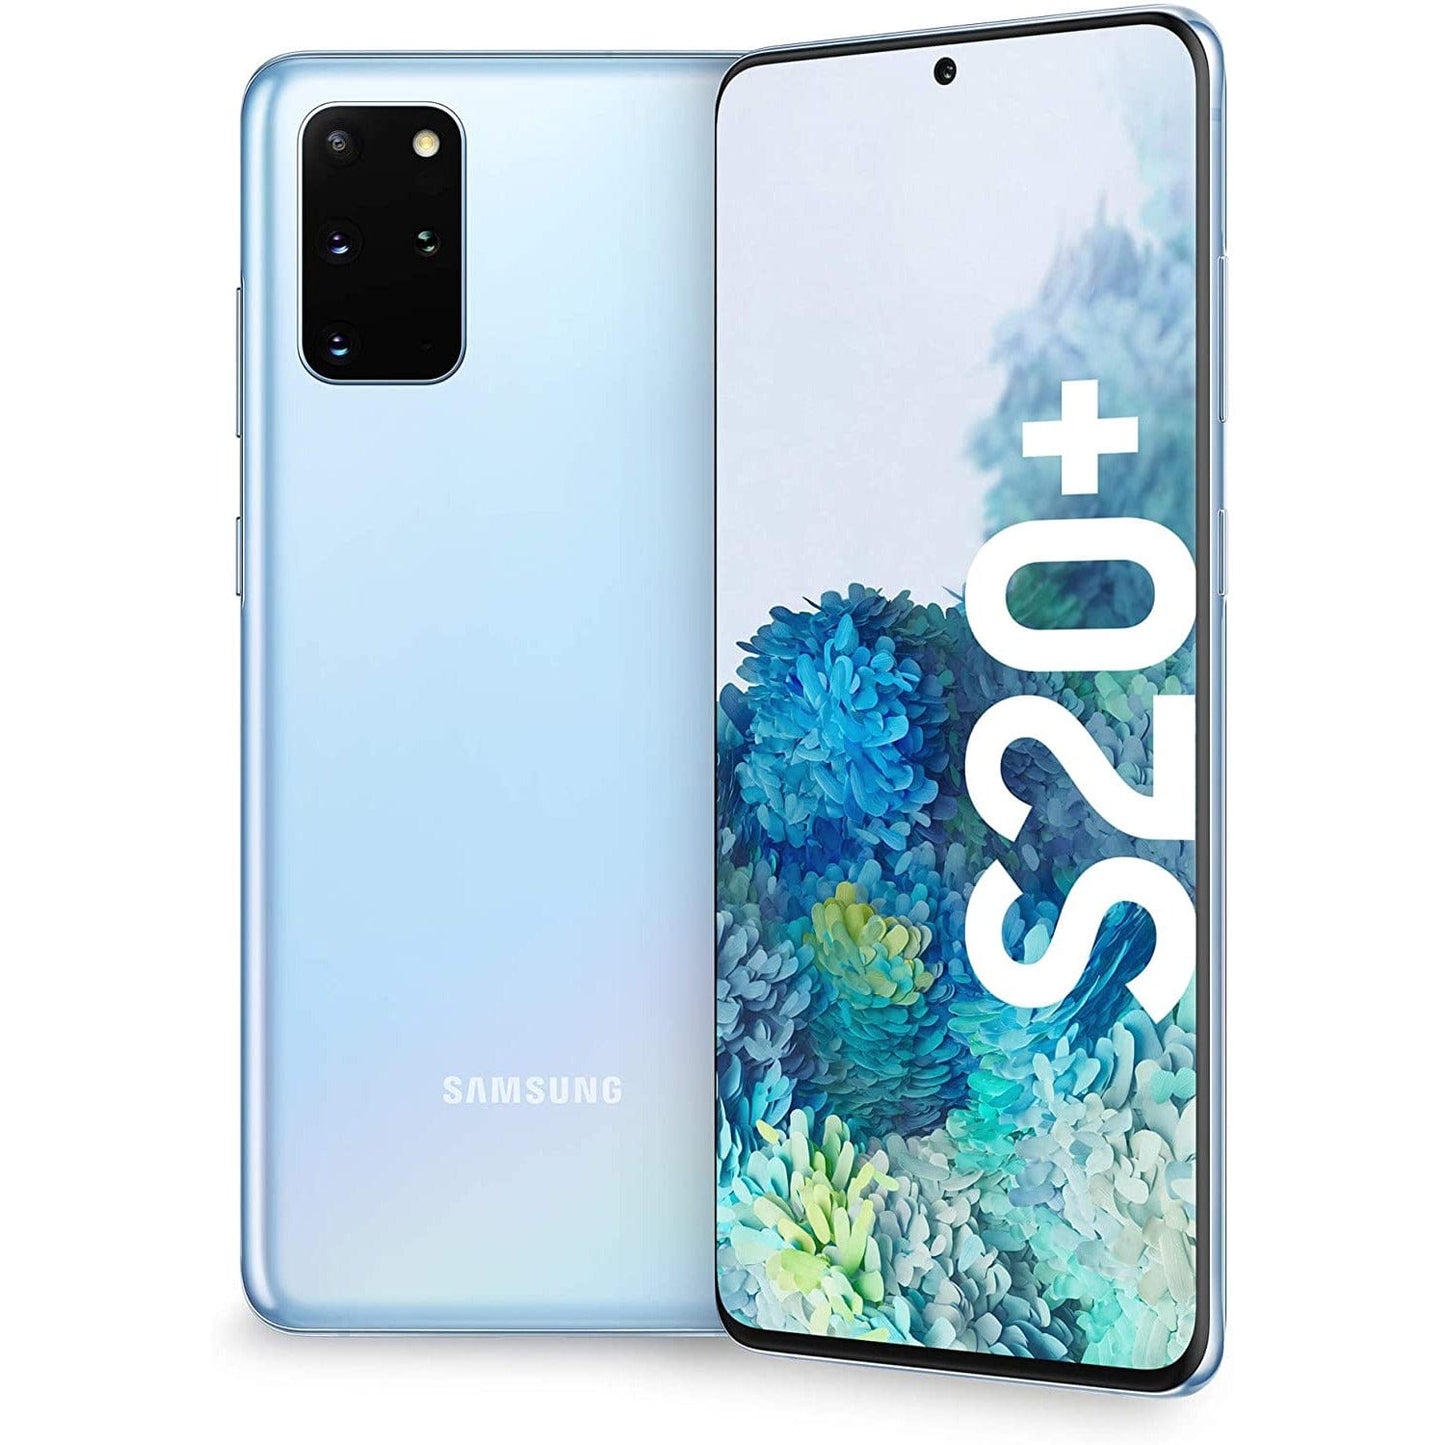 Samsung Galaxy S20+ - 128 GB - Cloud Blue - Unlocked